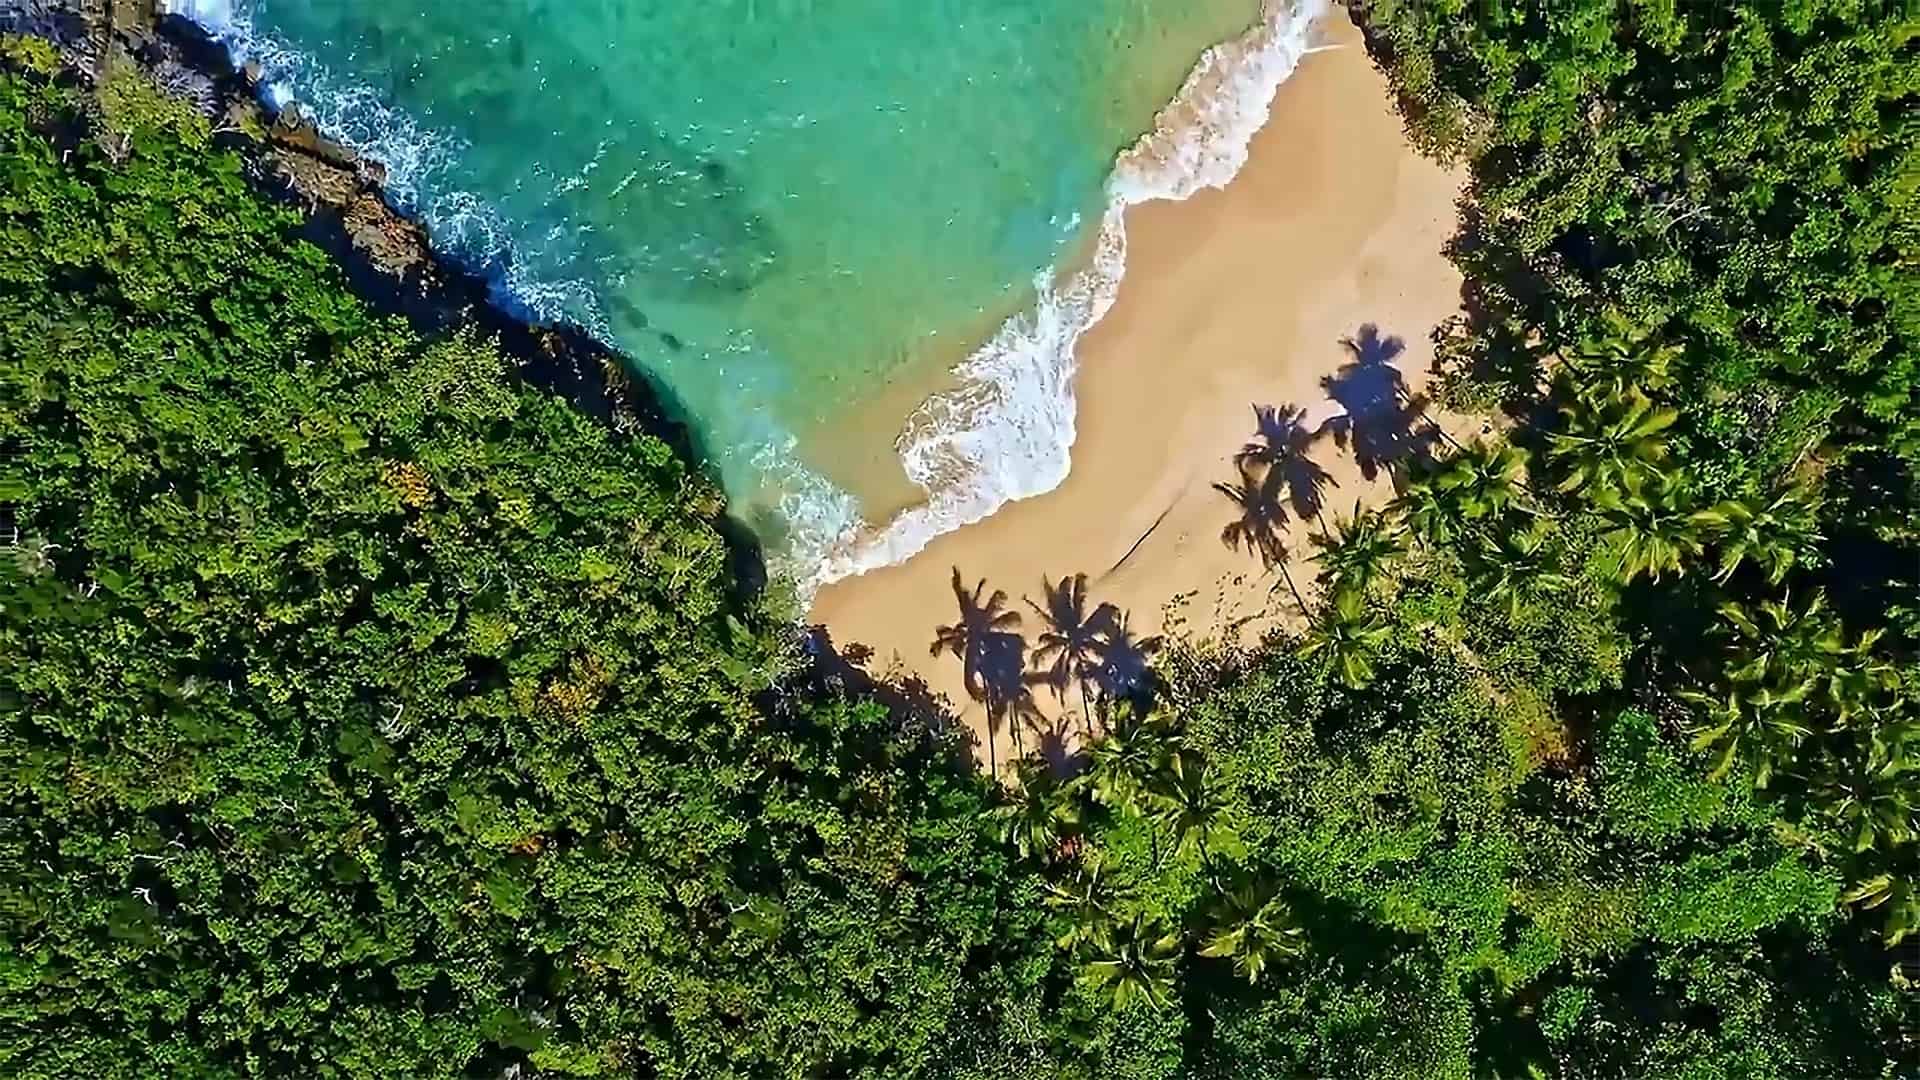 Beach at Peninsula of Samaná in the Dominican Republic.